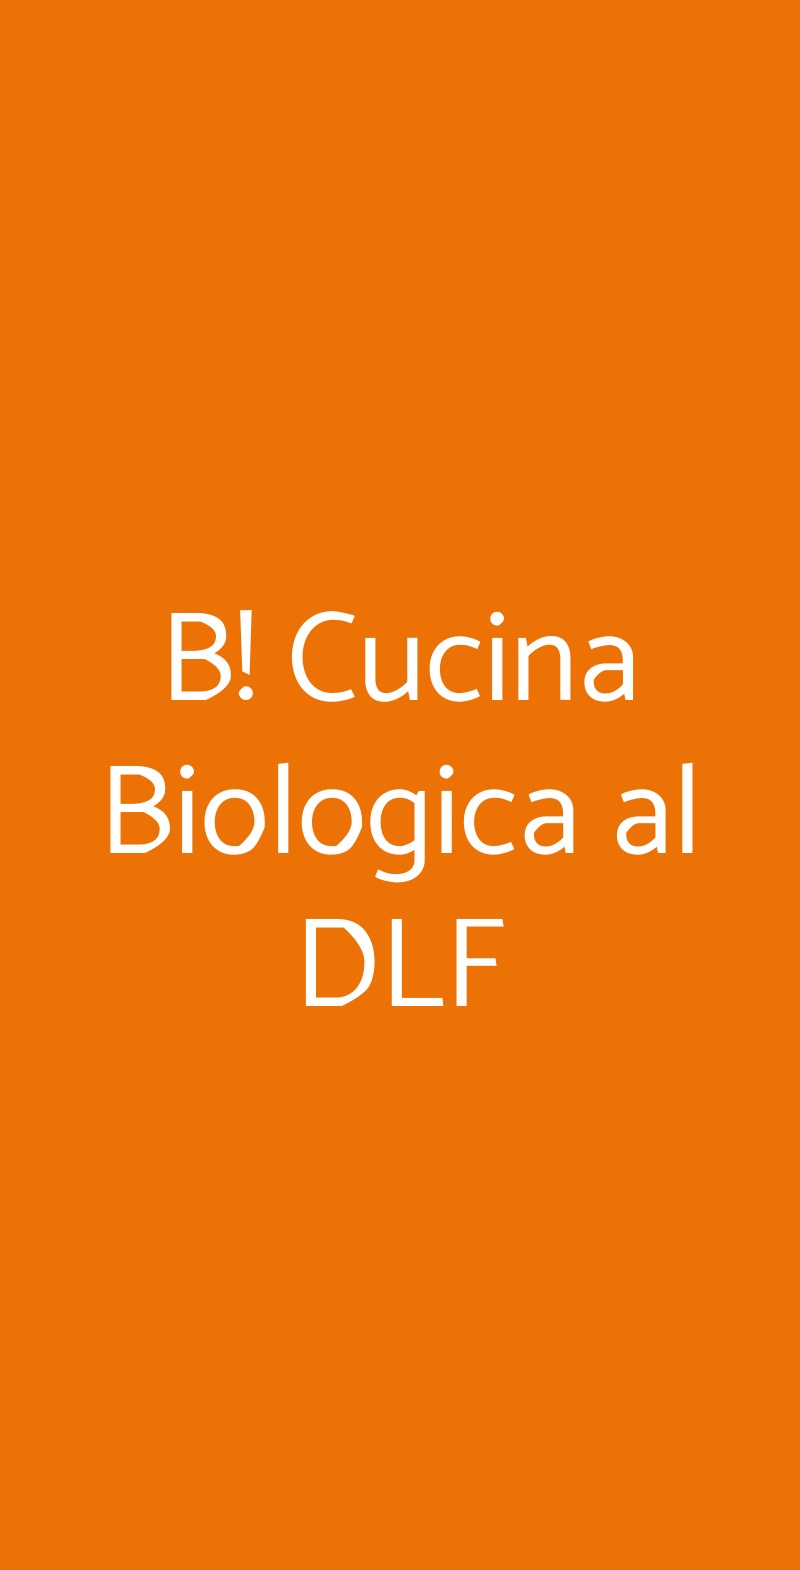 B! Cucina Biologica al DLF Bologna menù 1 pagina